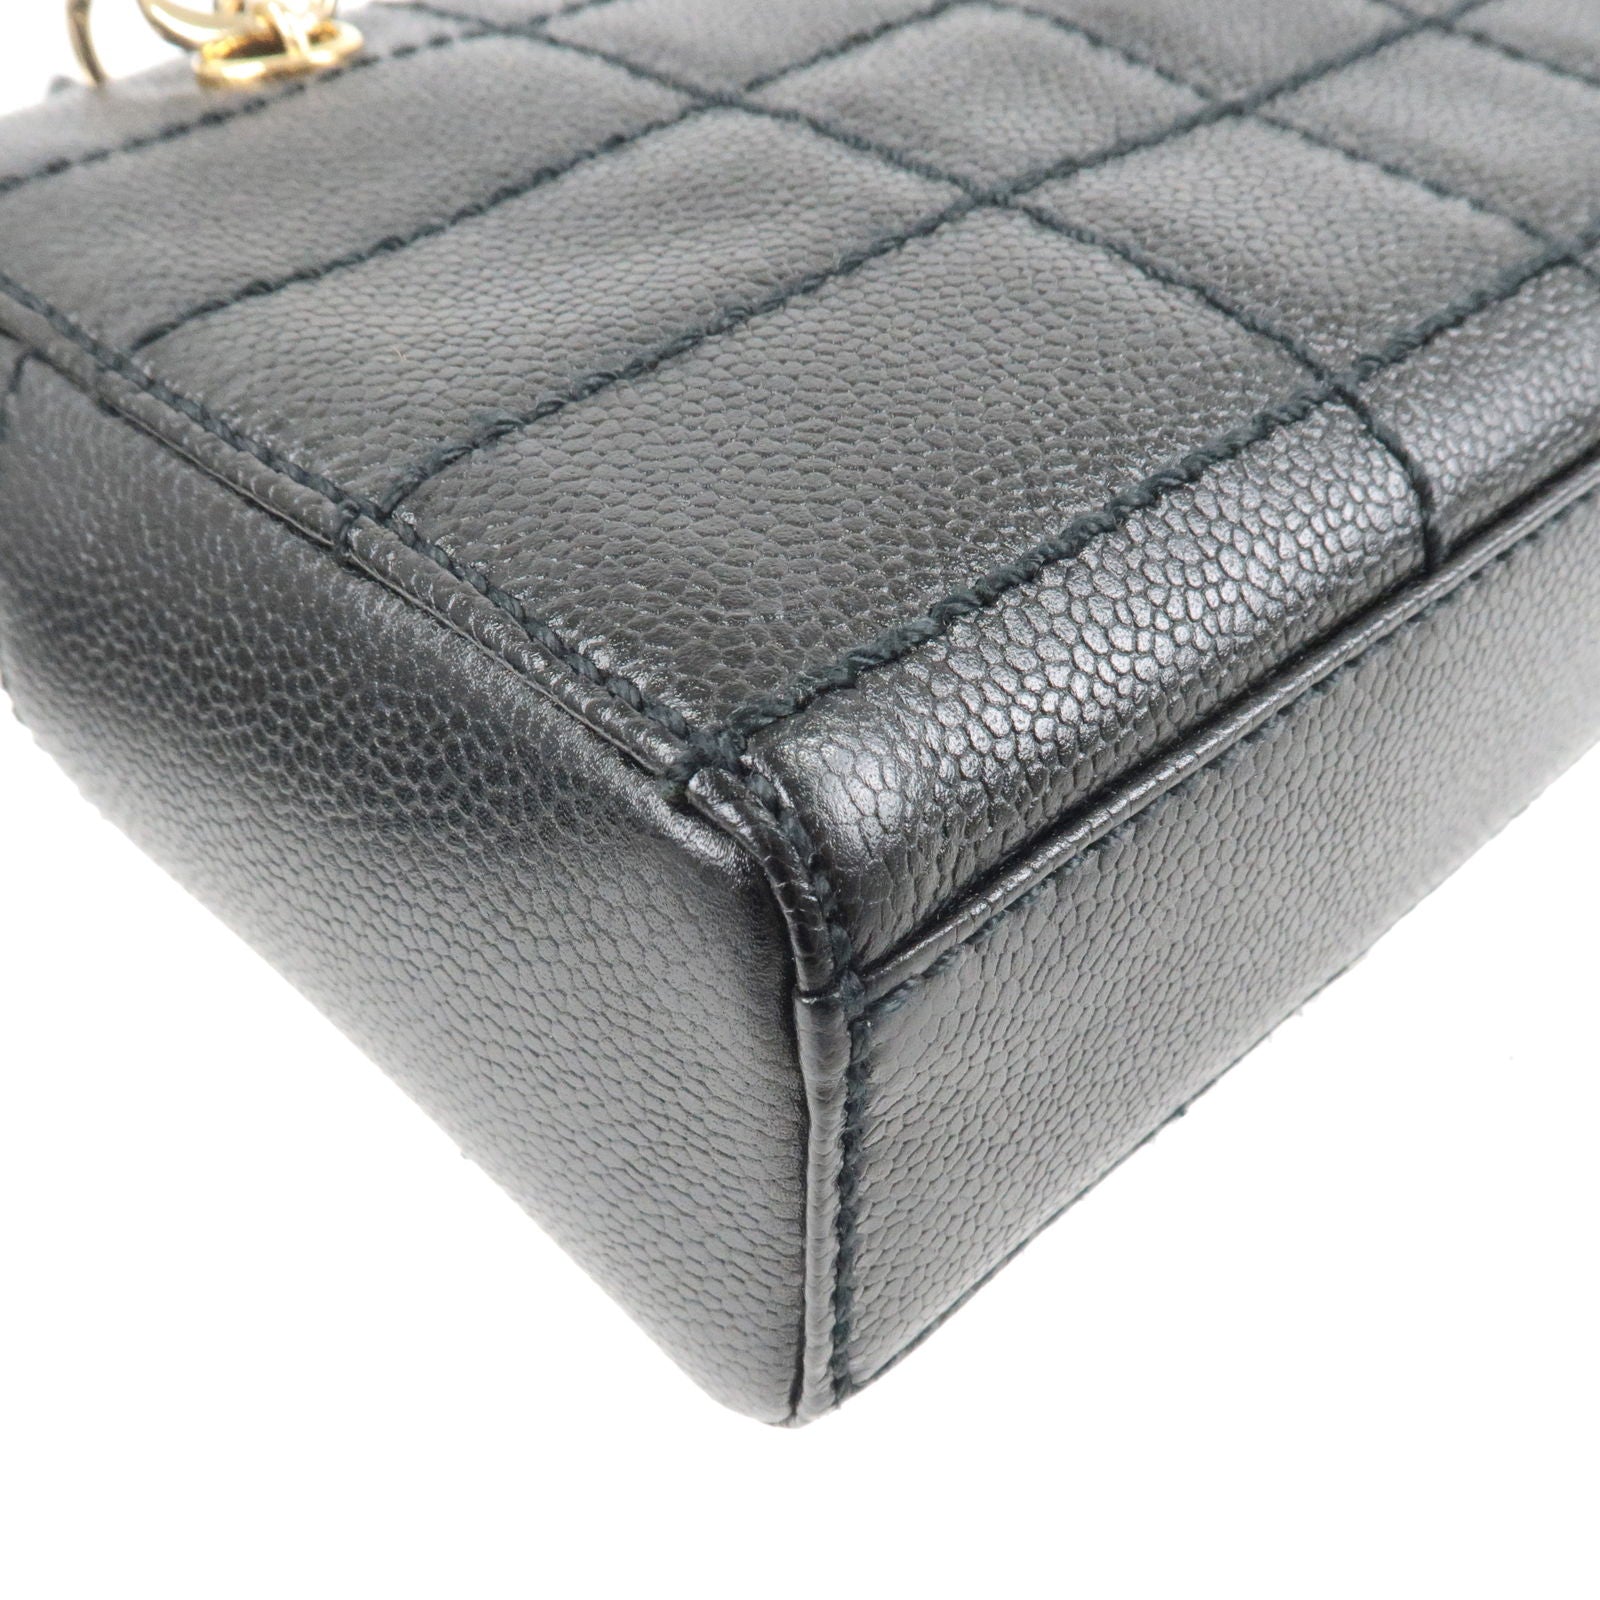 authentic chanel purse black